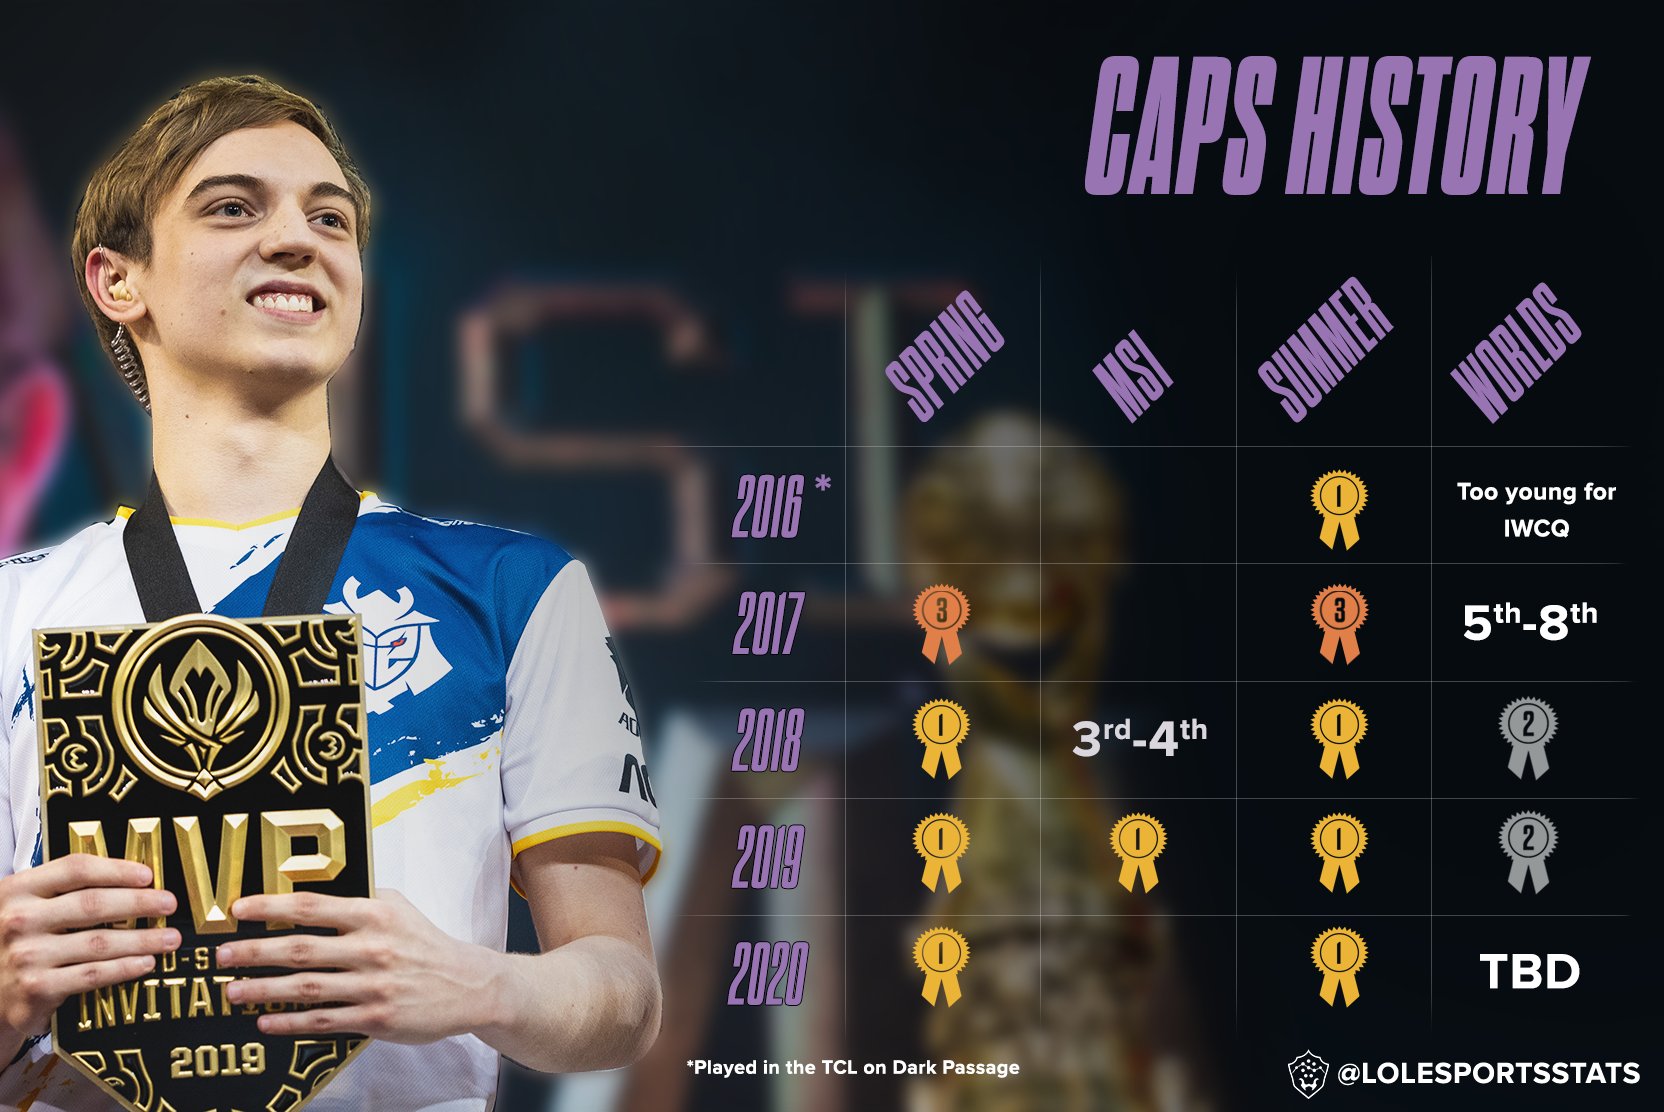 Caps职业生涯成绩单：连续6座LEC联赛奖杯、连续2次S赛决赛